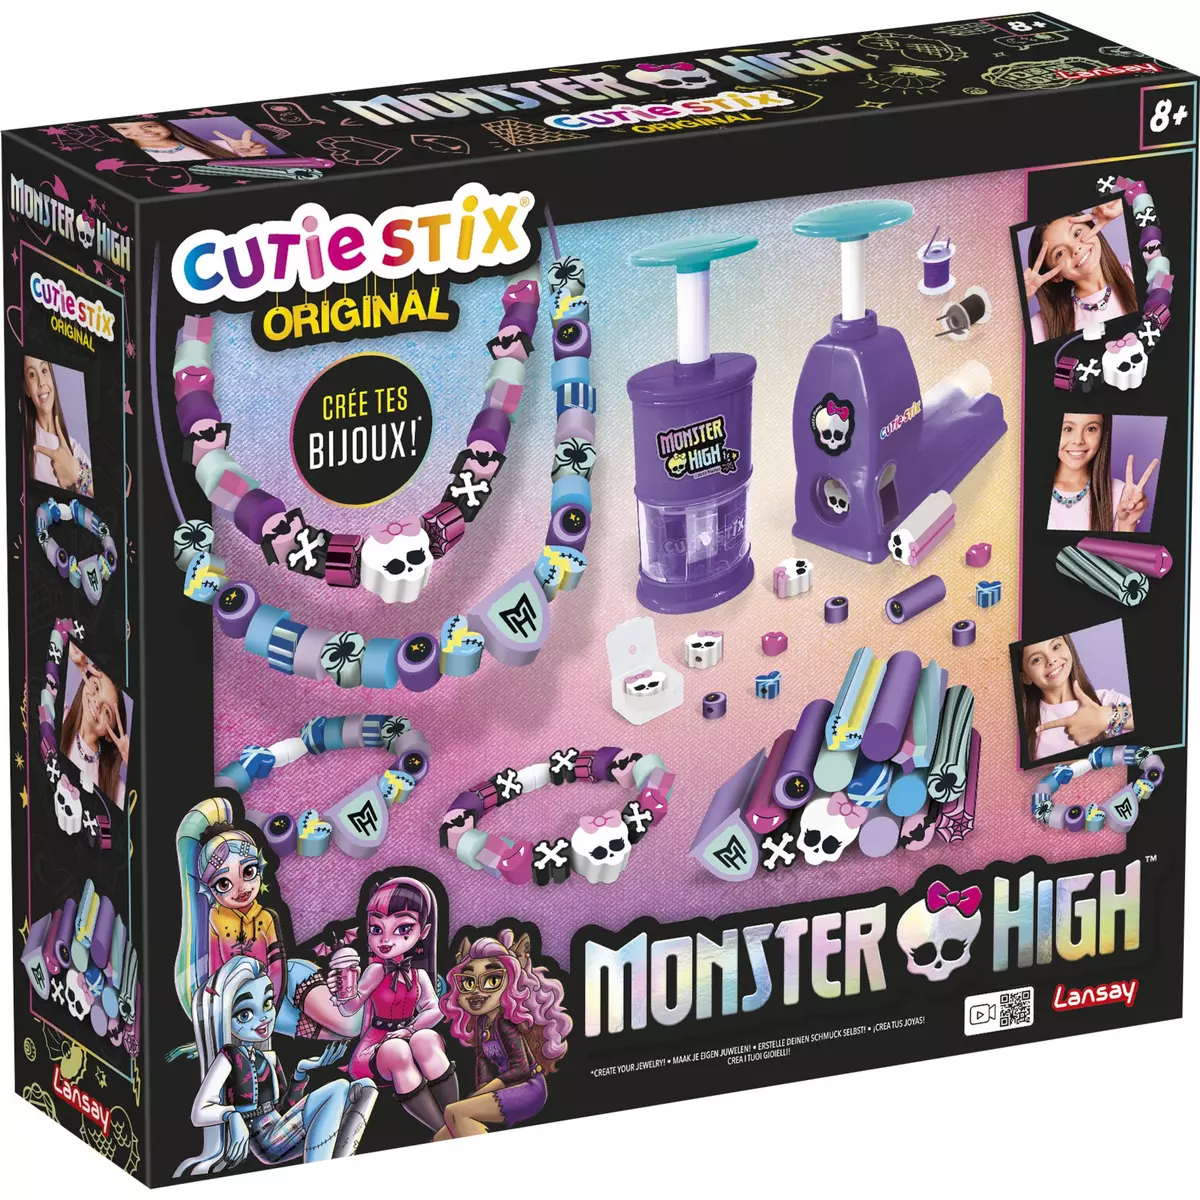 LANSAY Coffret Cutie Stix Original Monster High